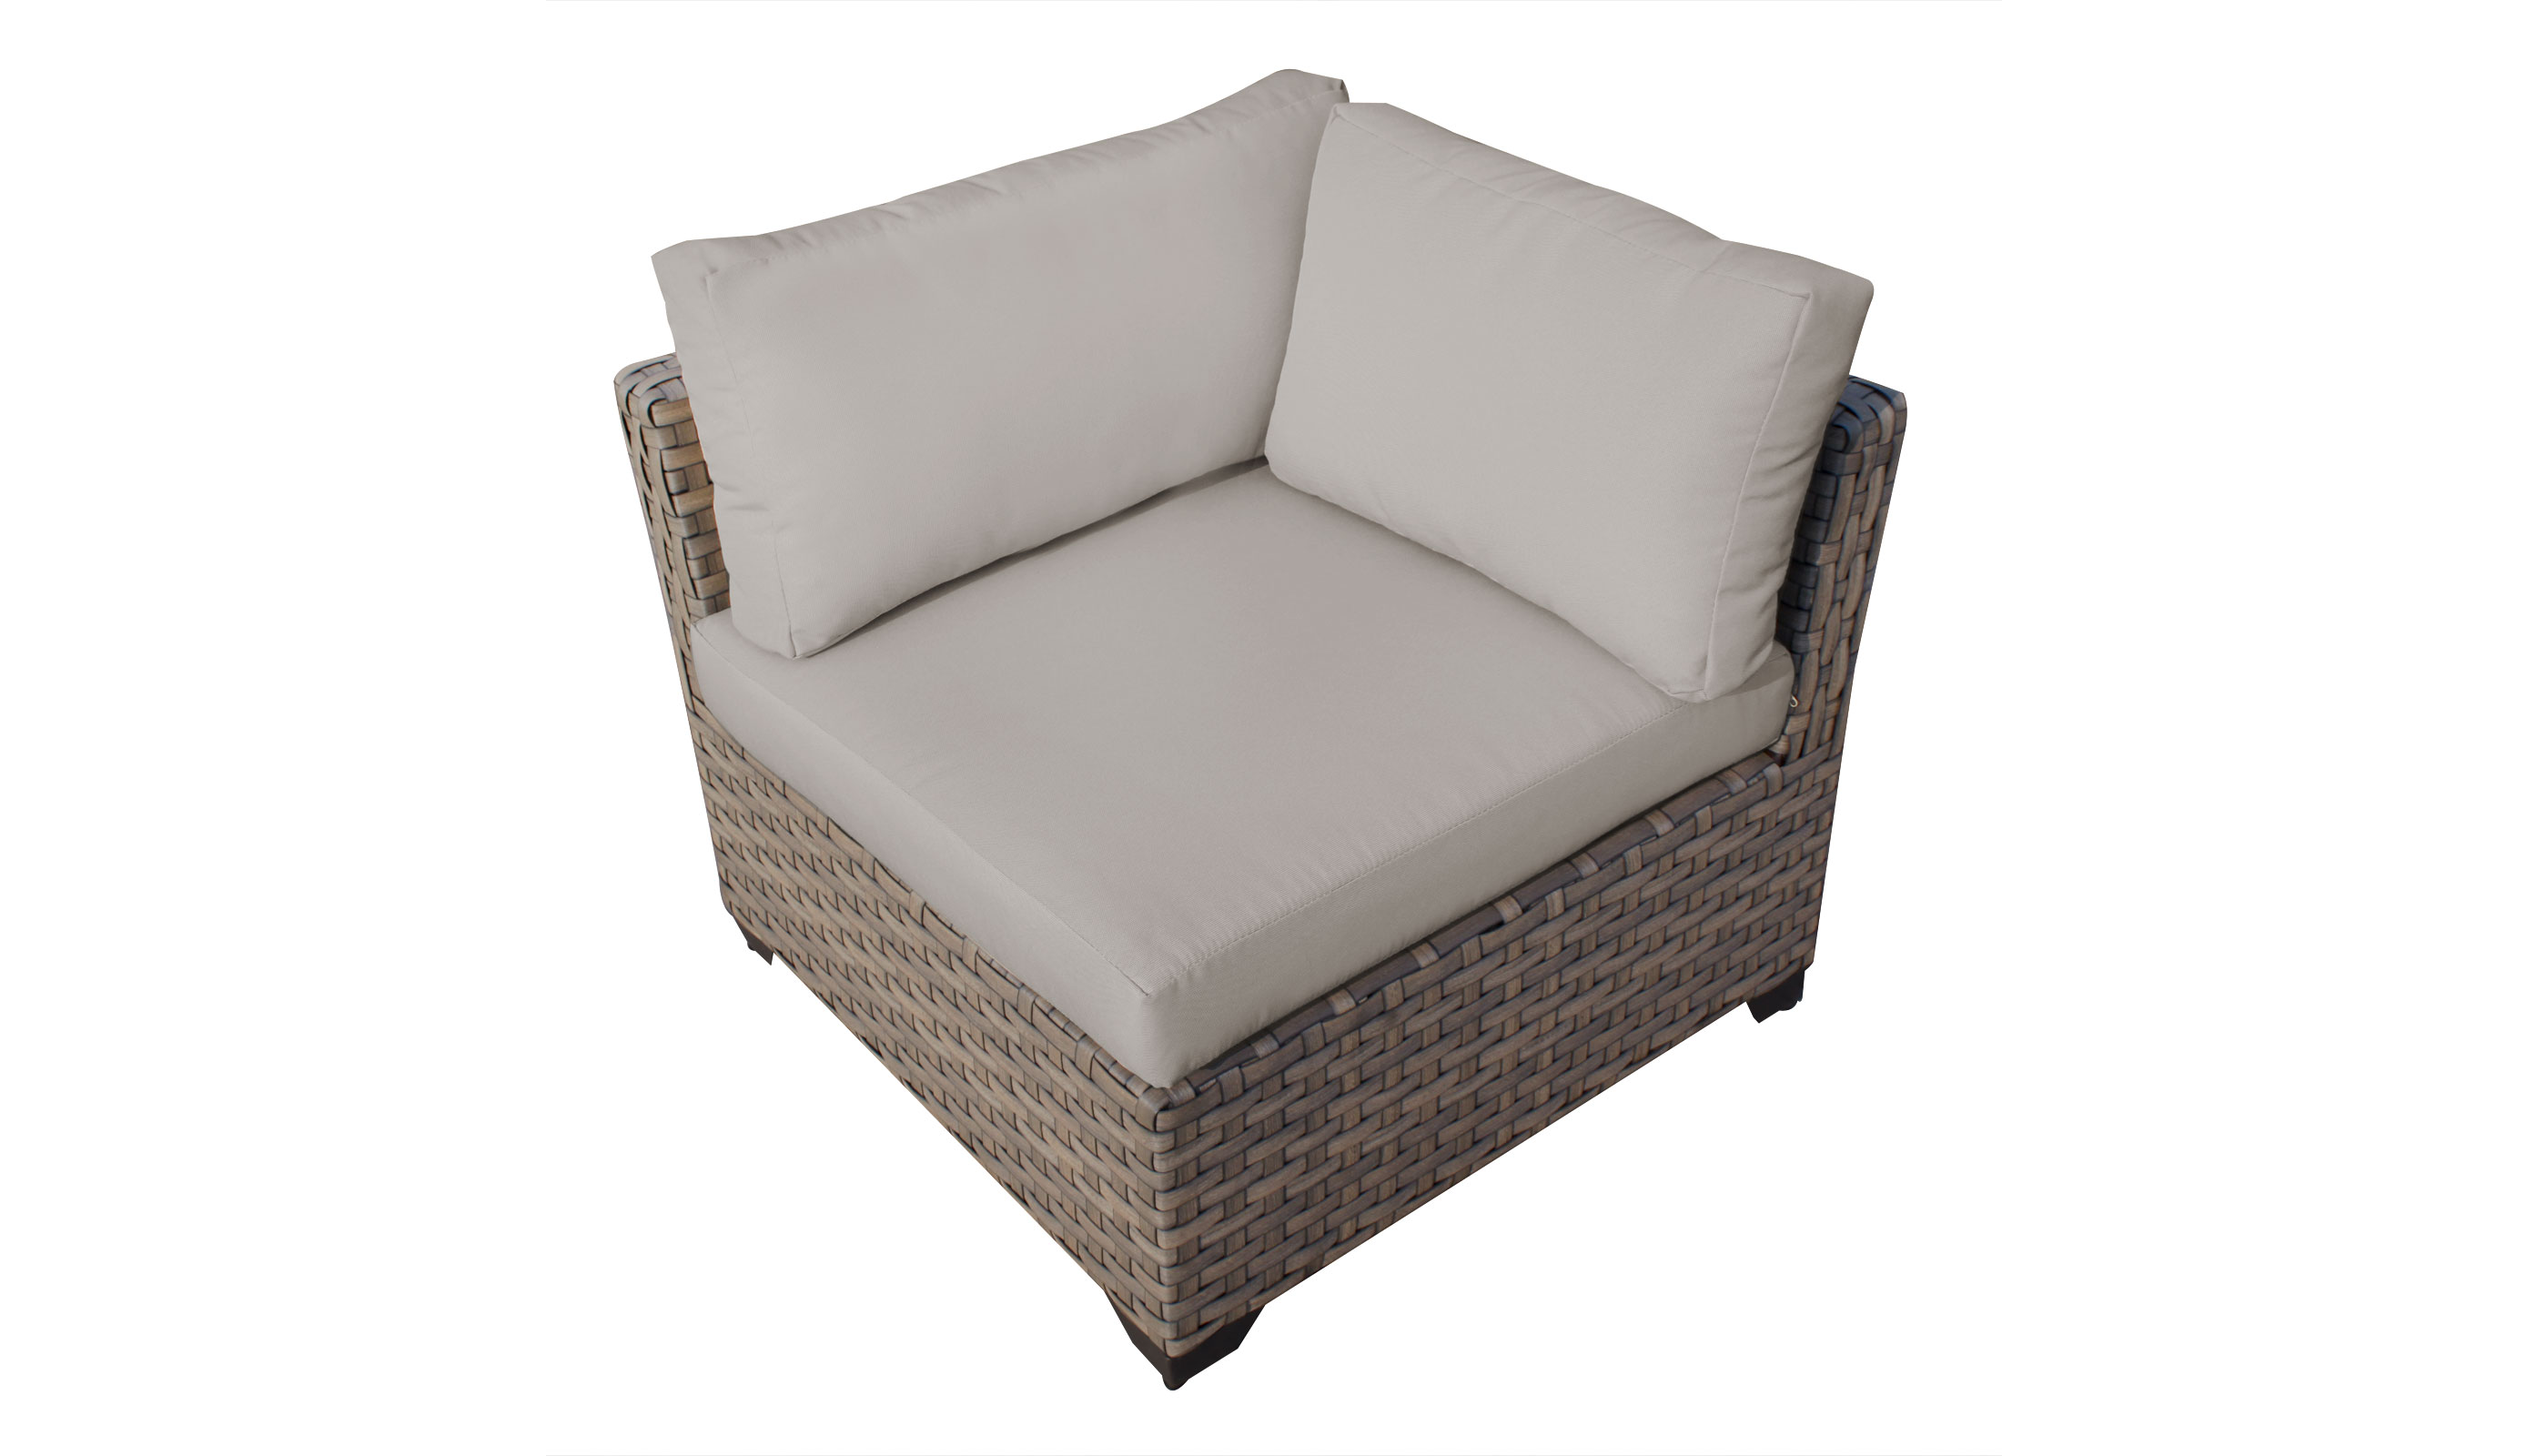 Monterey 3 Piece Outdoor Wicker Patio Furniture Set 03b - TK Classics